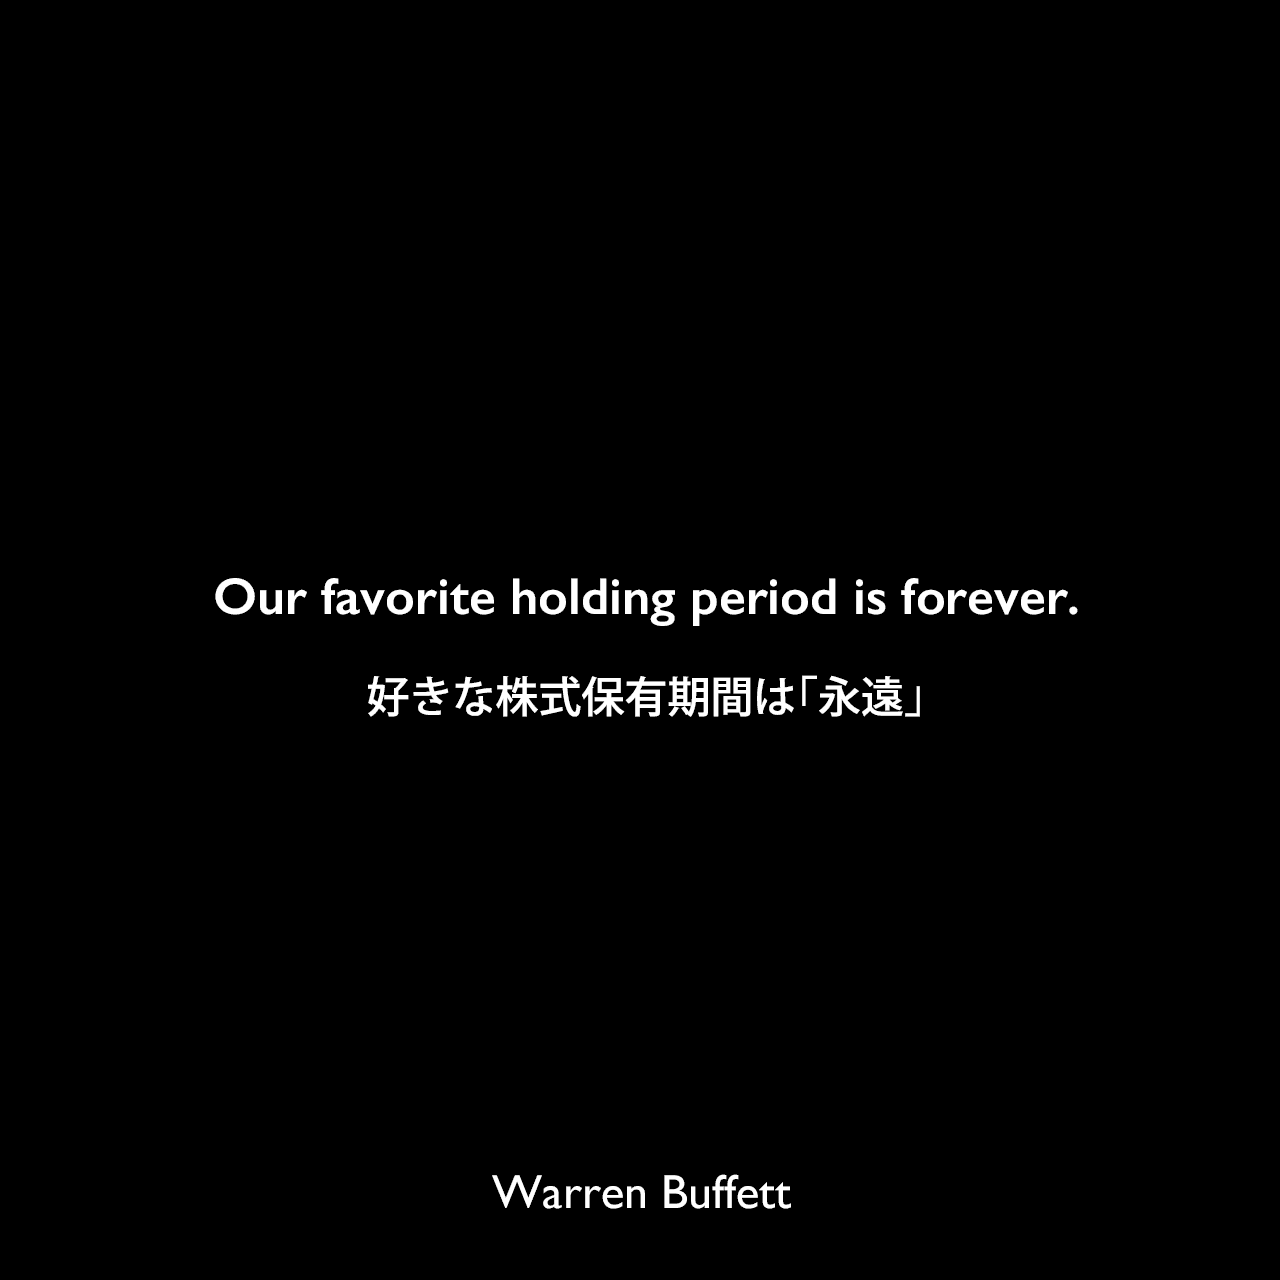 Our favorite holding period is forever.好きな株式保有期間は「永遠」Warren Buffett